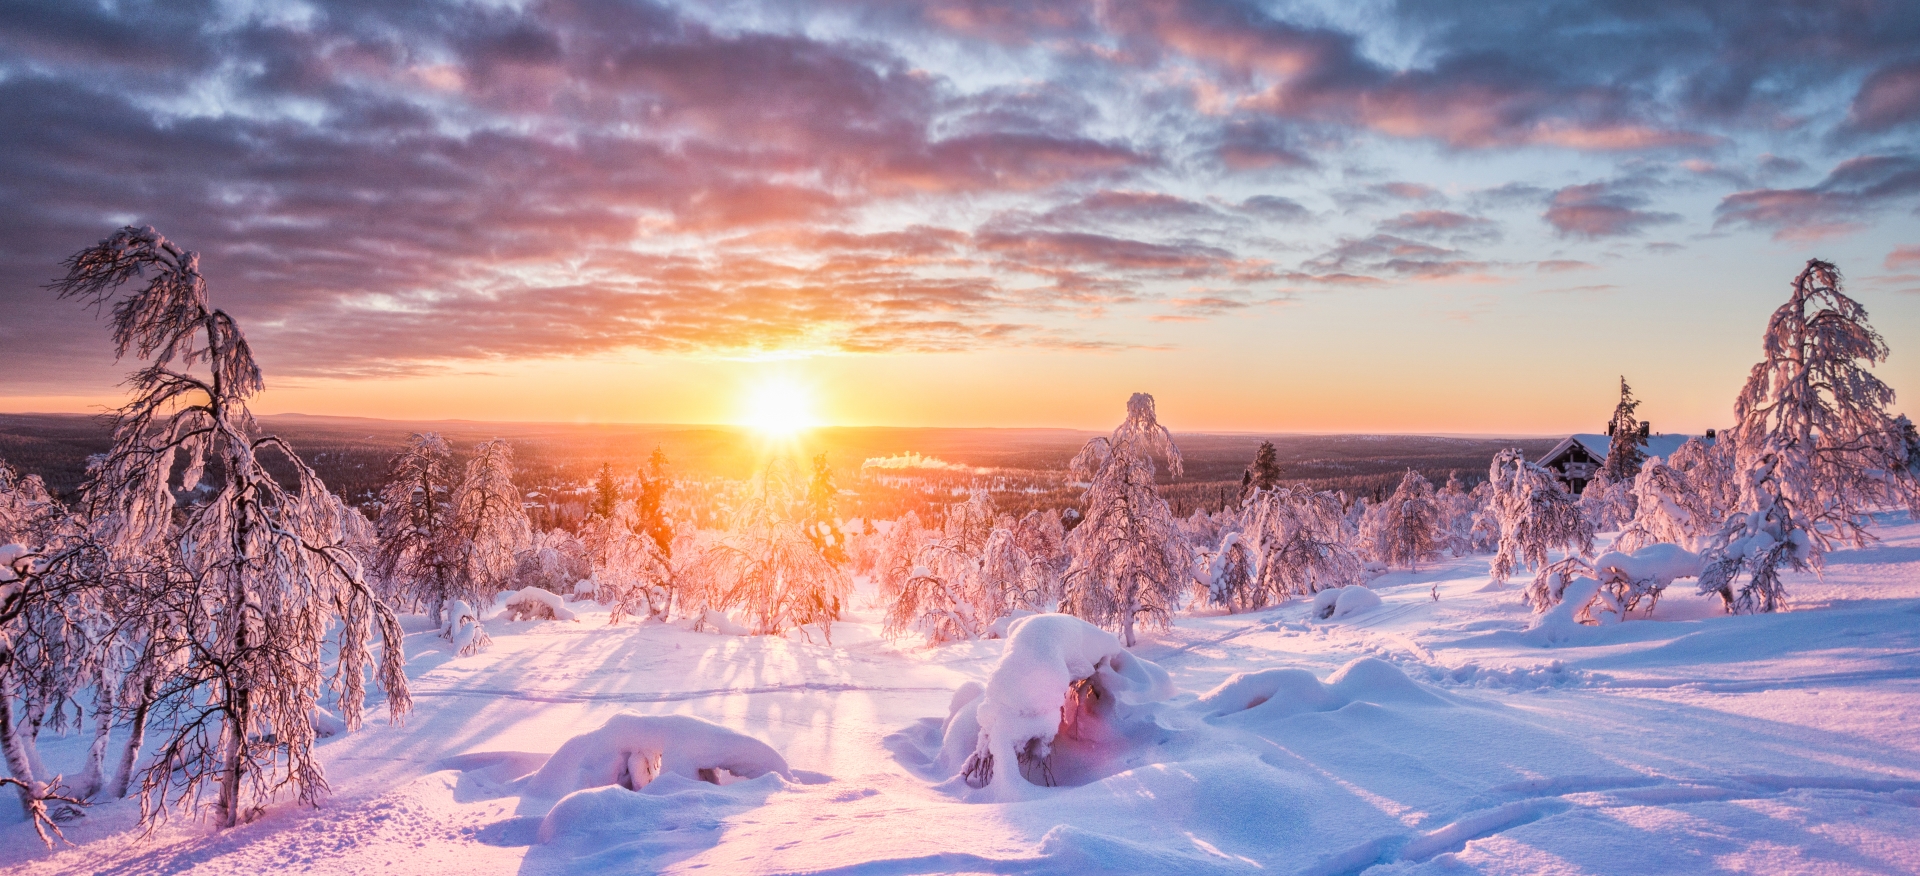 Scenery - Simply Finnish Lapland